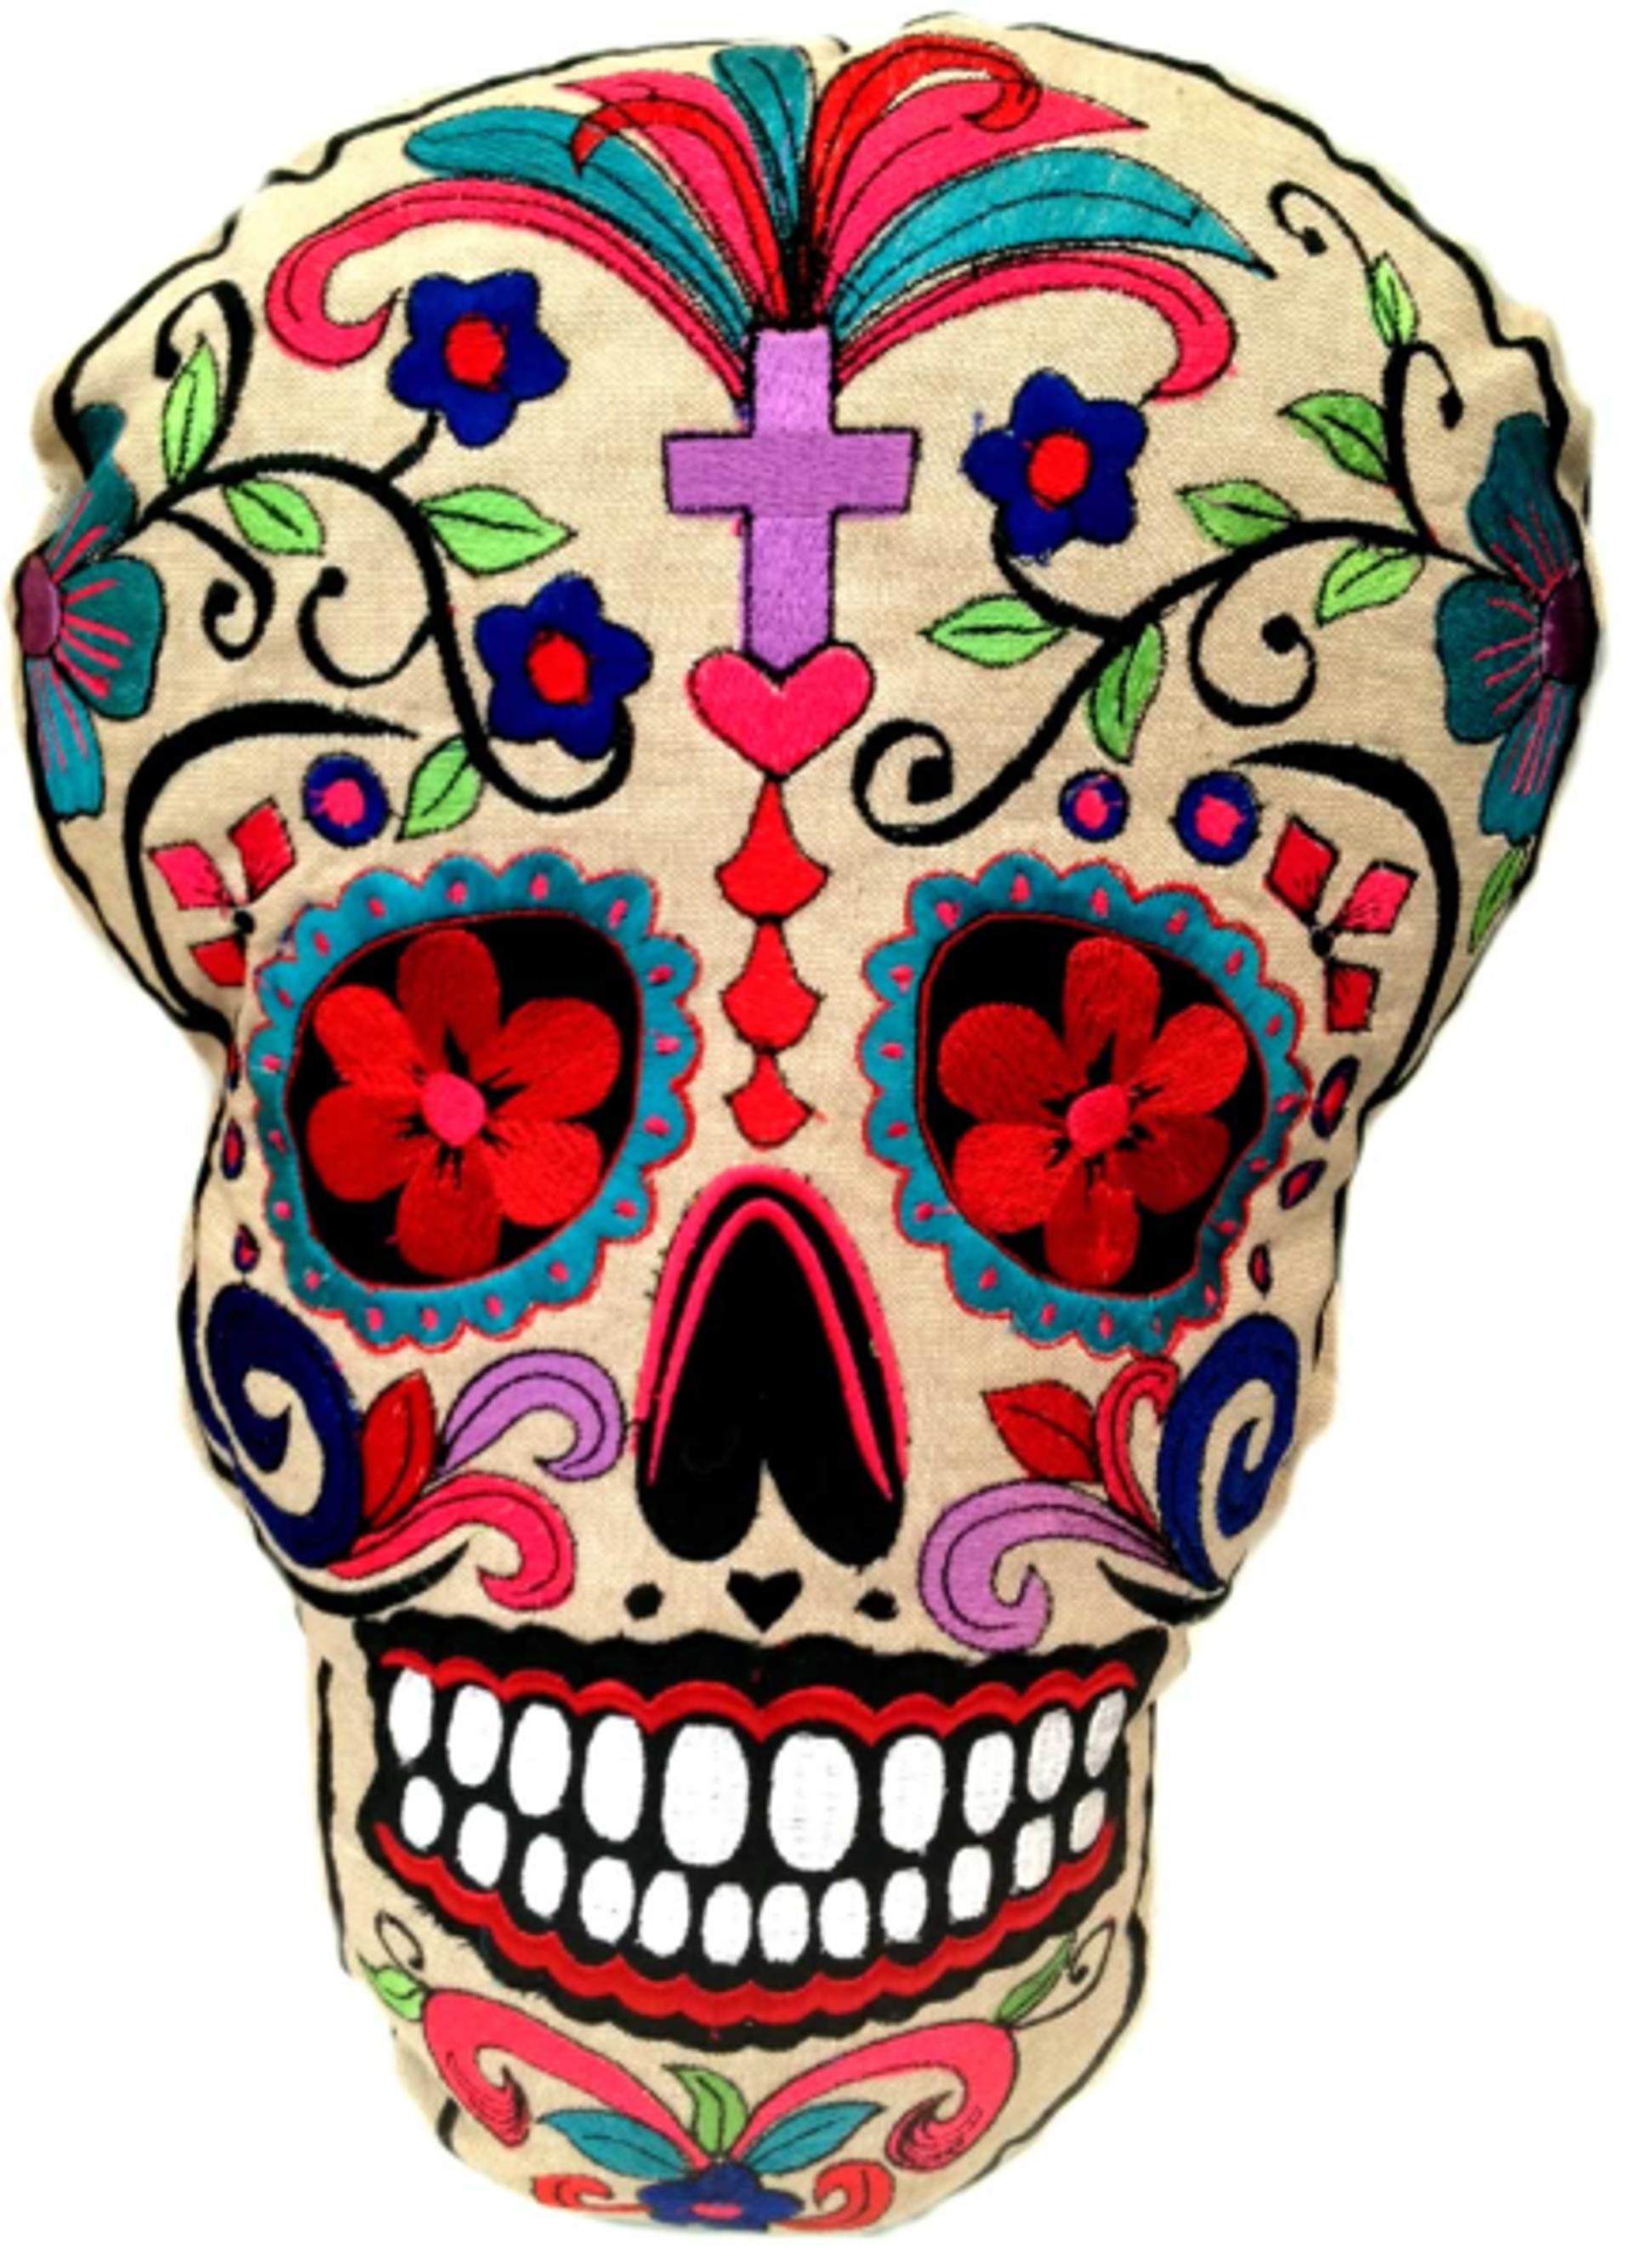 Calavera - Skull Pillow with Purple Cross by Indigo Desert Ranch - Day of the Dead